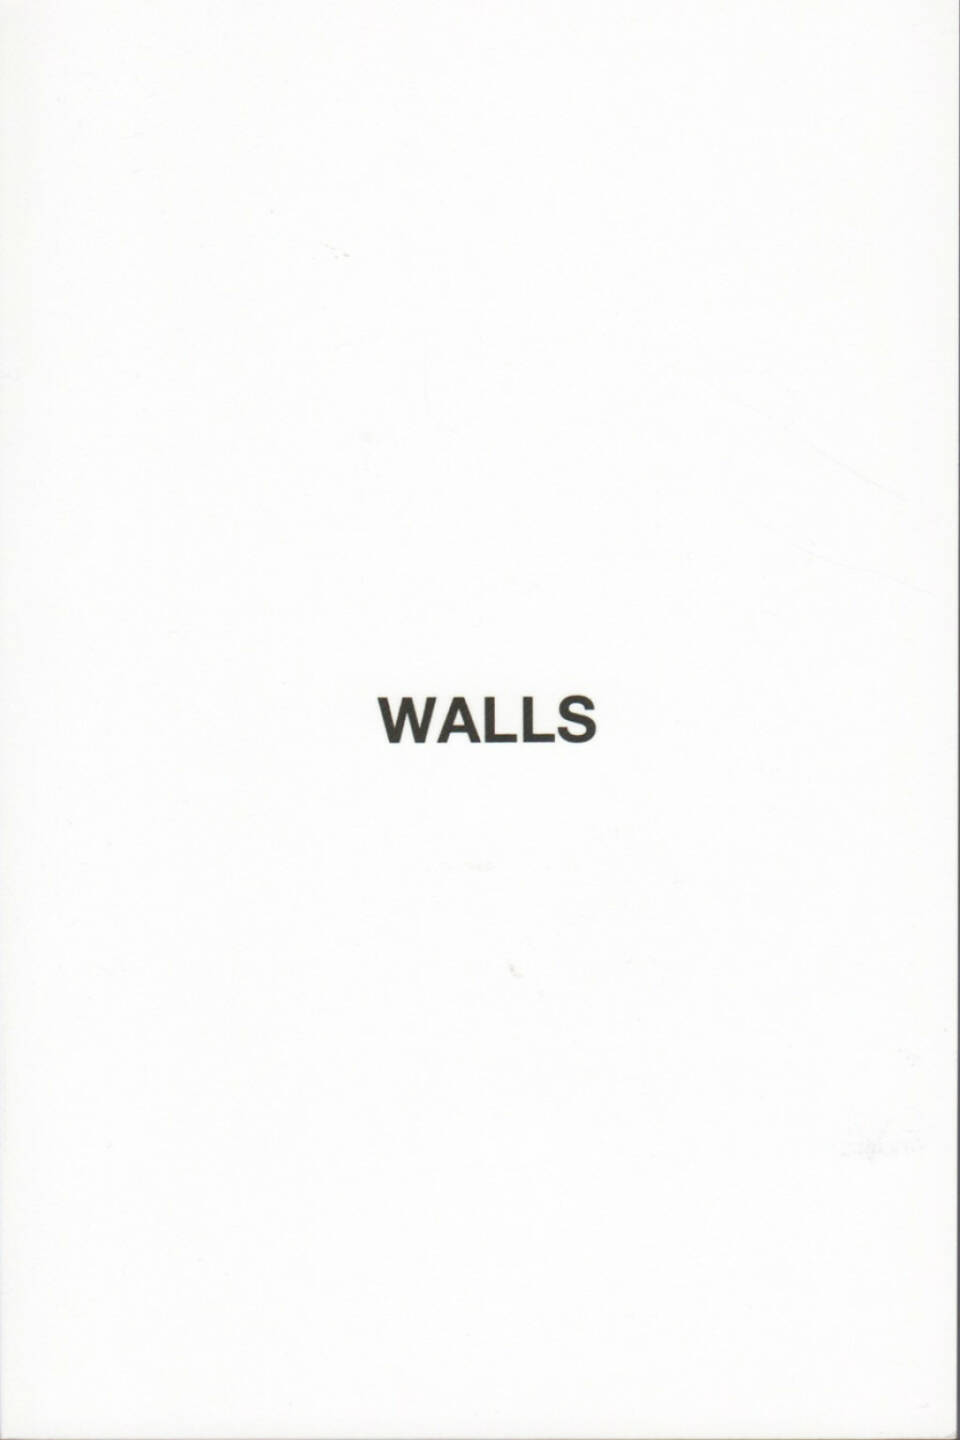 Hermann Zschiegner - Walls, Self published/Blurb 2014 - Cover - http://josefchladek.com/book/hermann_zschiegner_-_walls